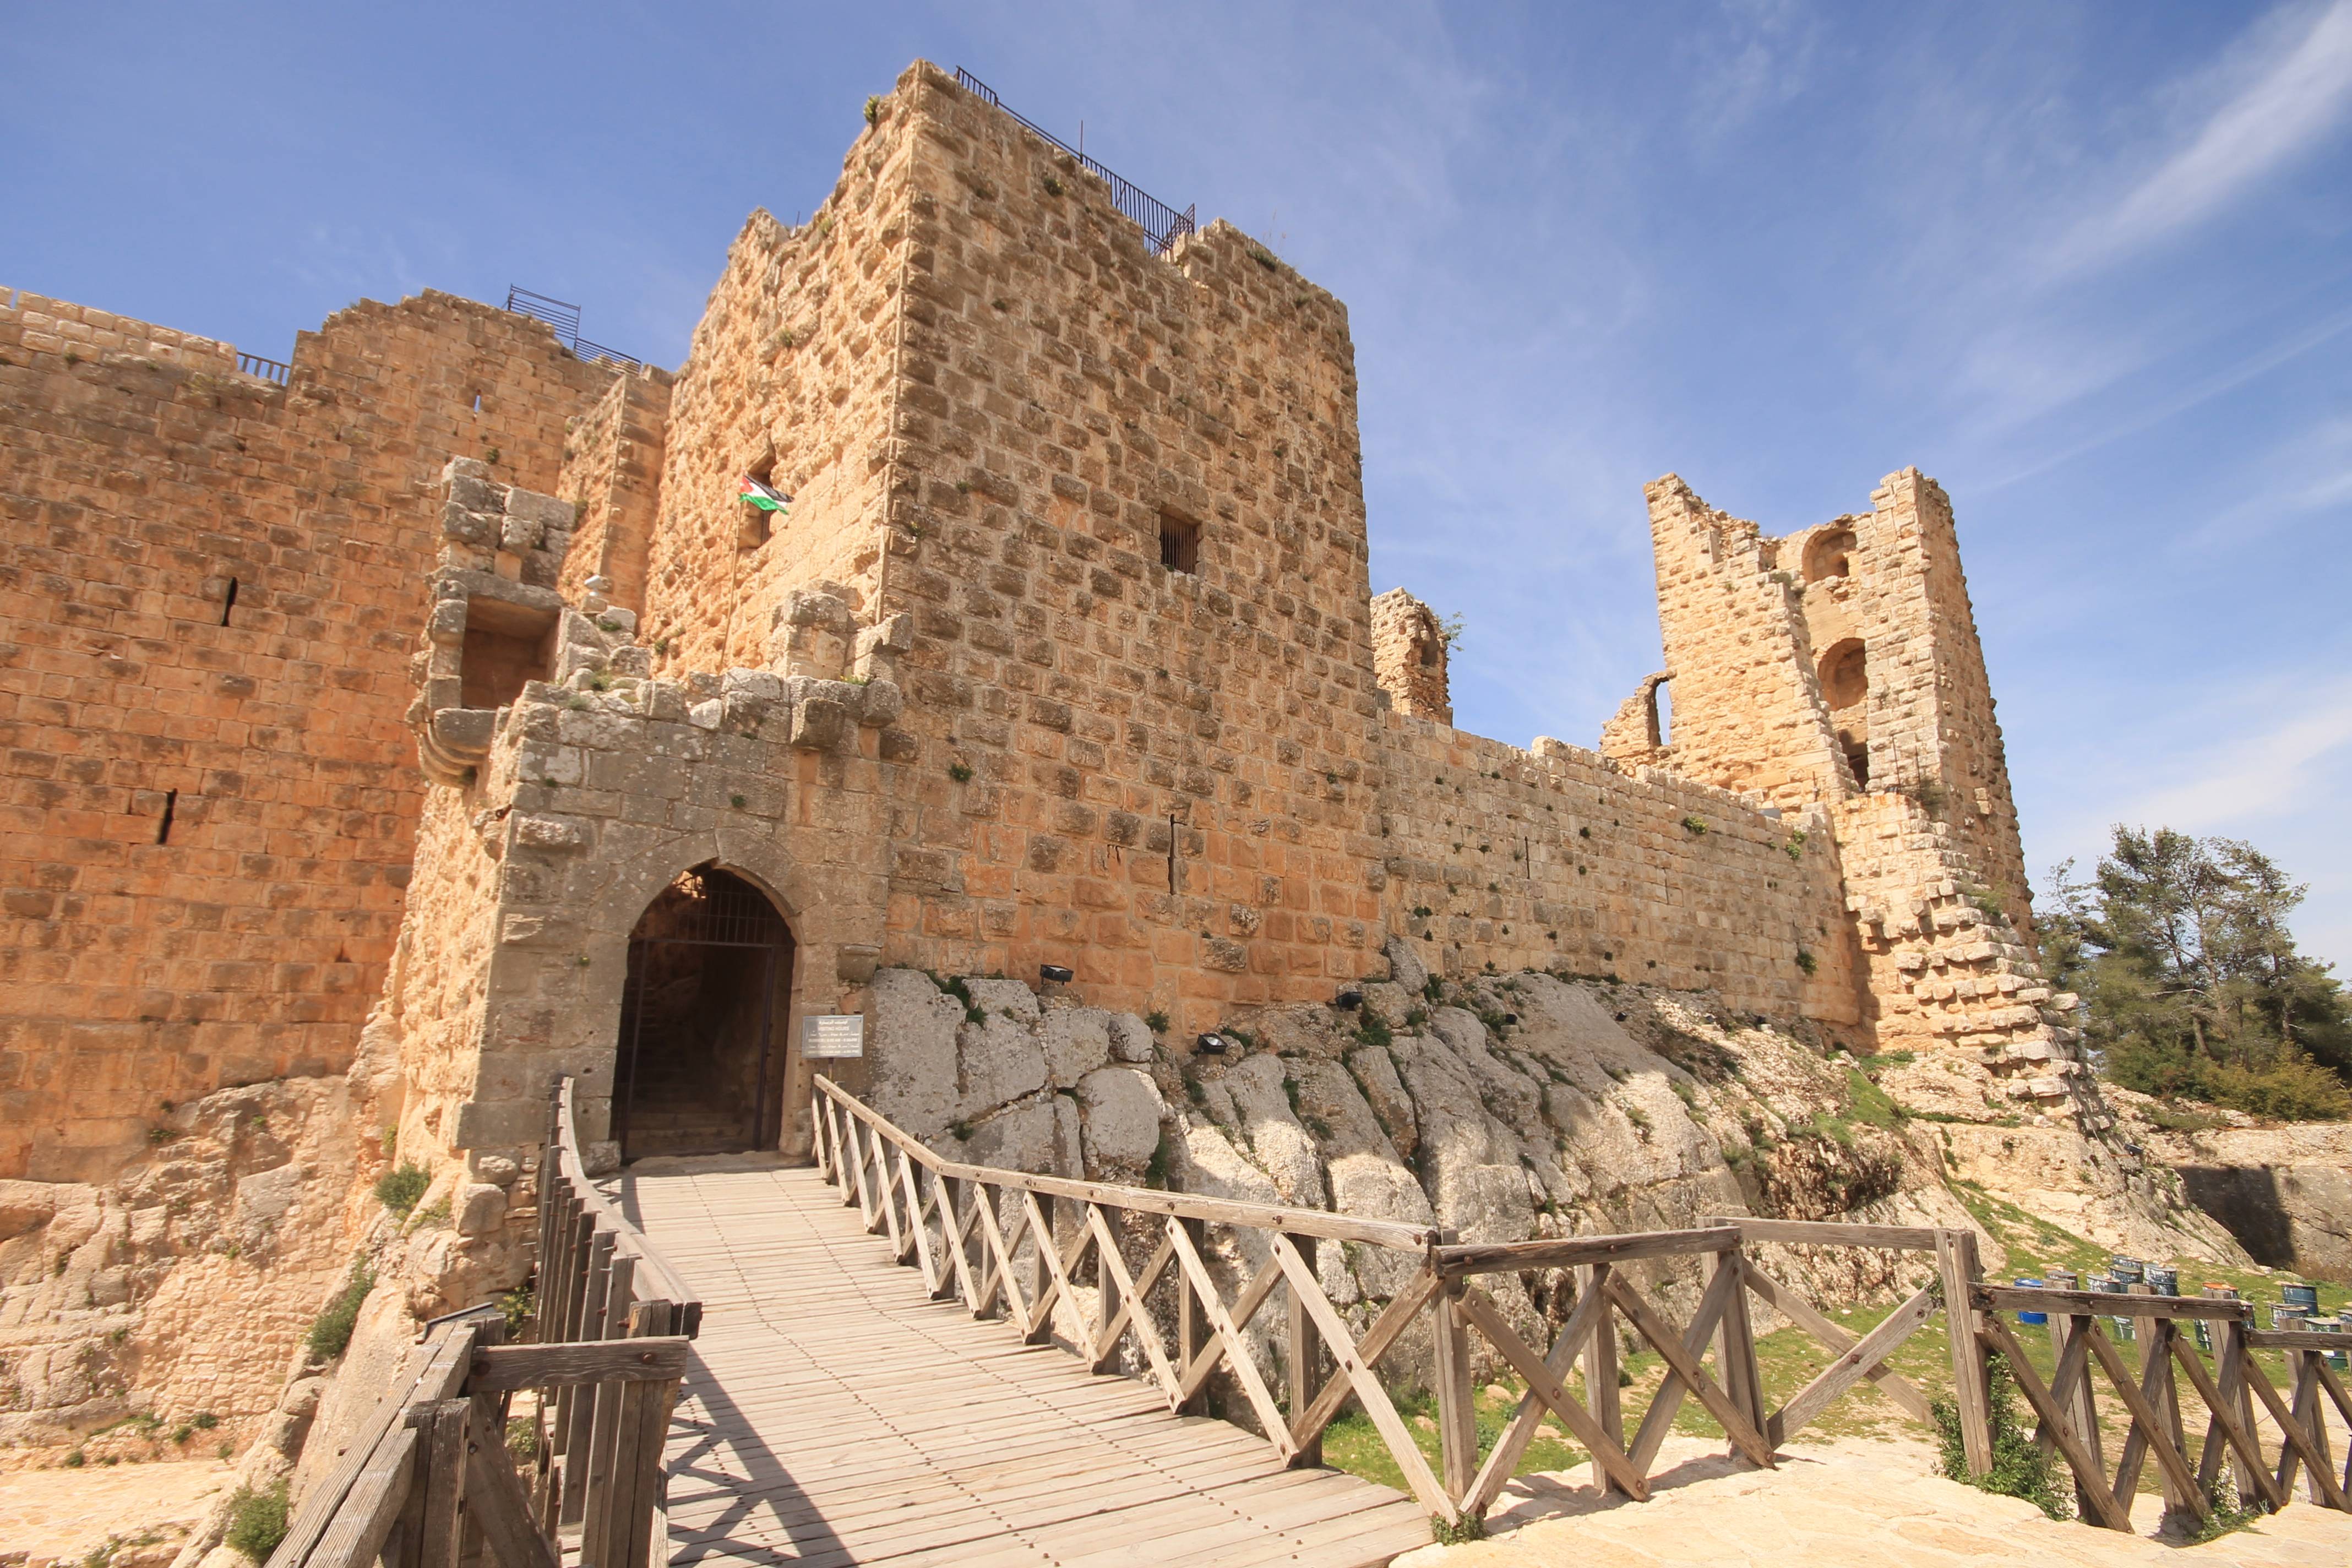 Jodan - Ajloun Castle